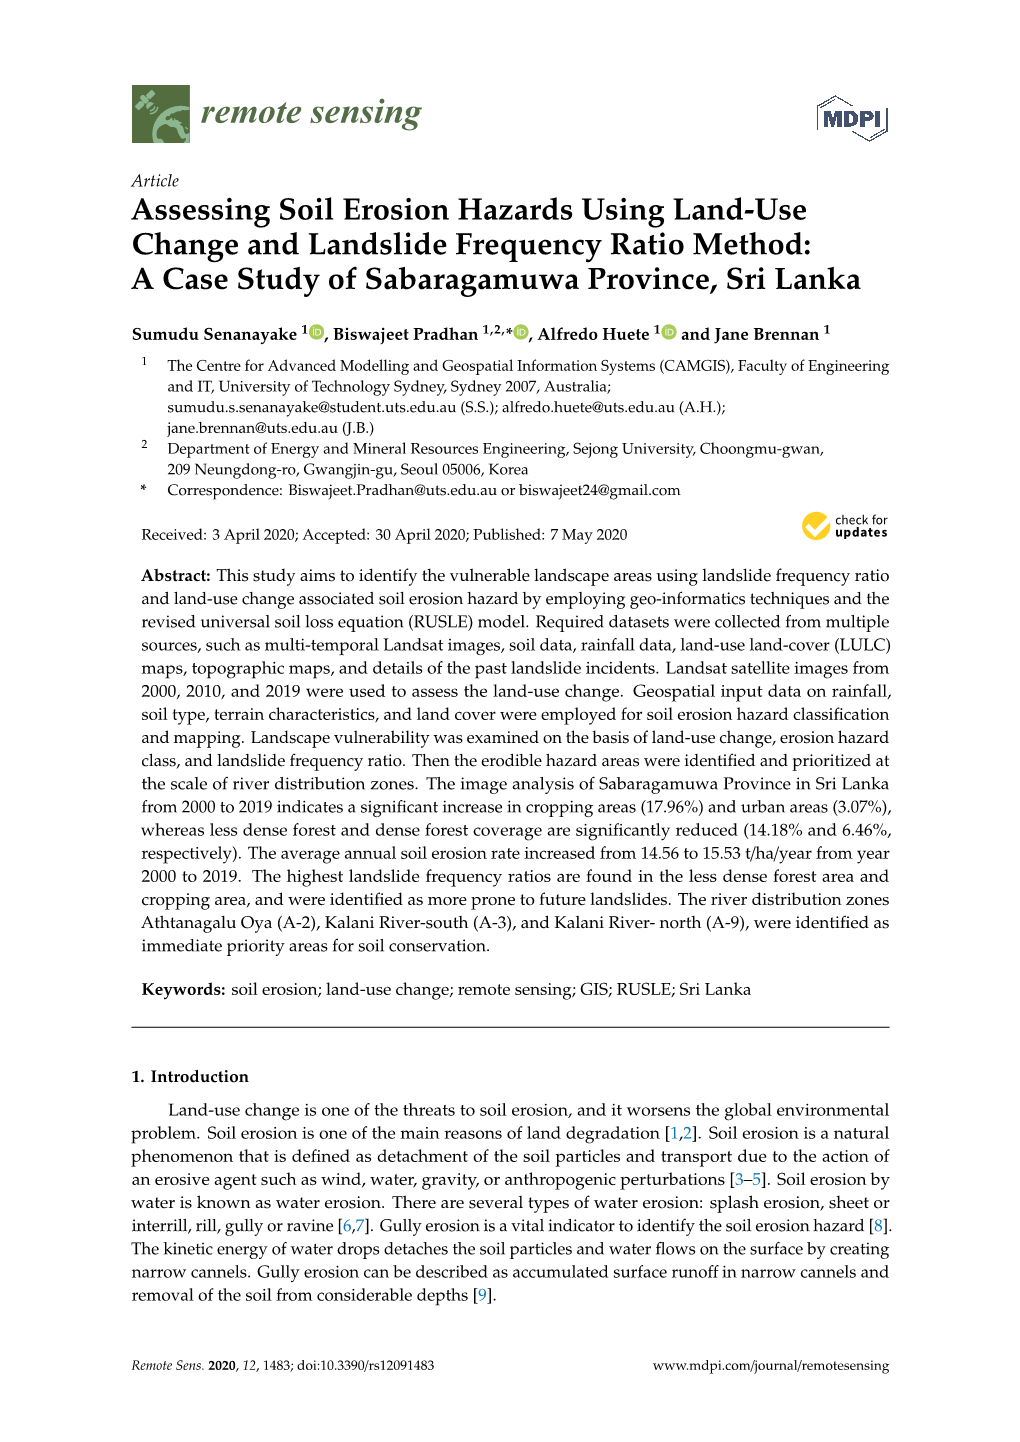 Assessing Soil Erosion Hazards Using Land-Use Change and Landslide Frequency Ratio Method: a Case Study of Sabaragamuwa Province, Sri Lanka